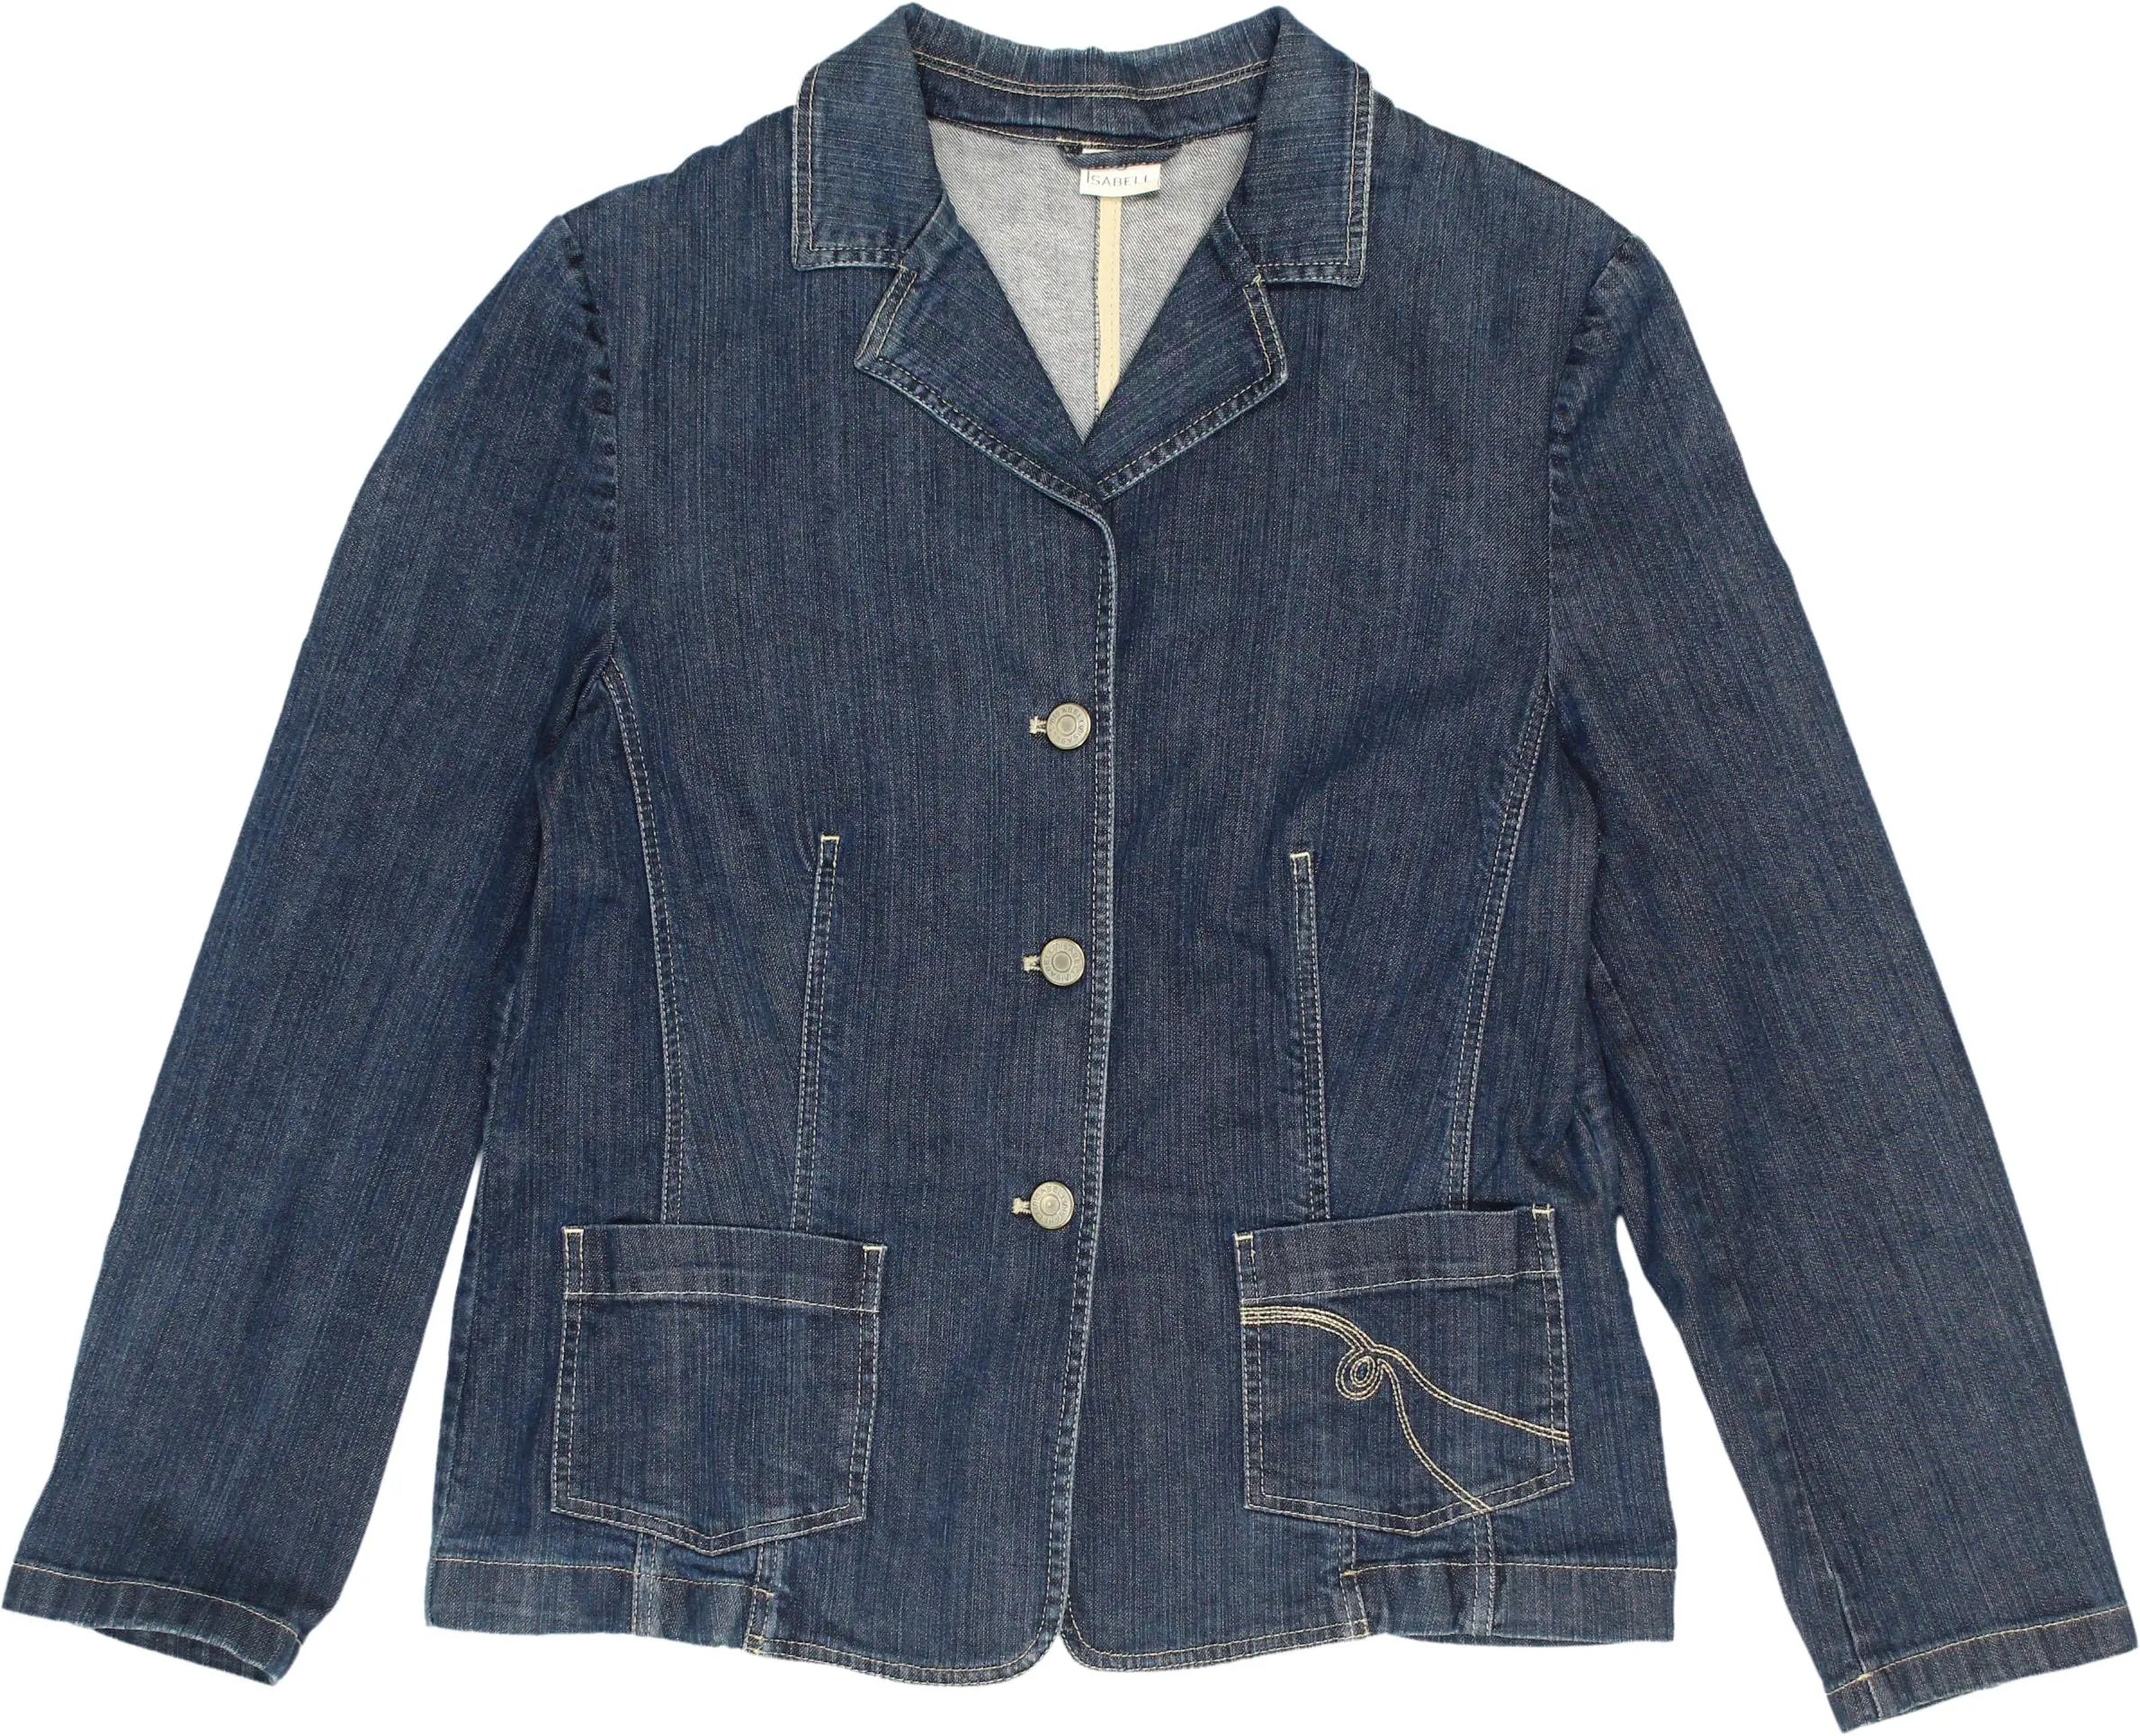 Isabell - Denim Jacket- ThriftTale.com - Vintage and second handclothing